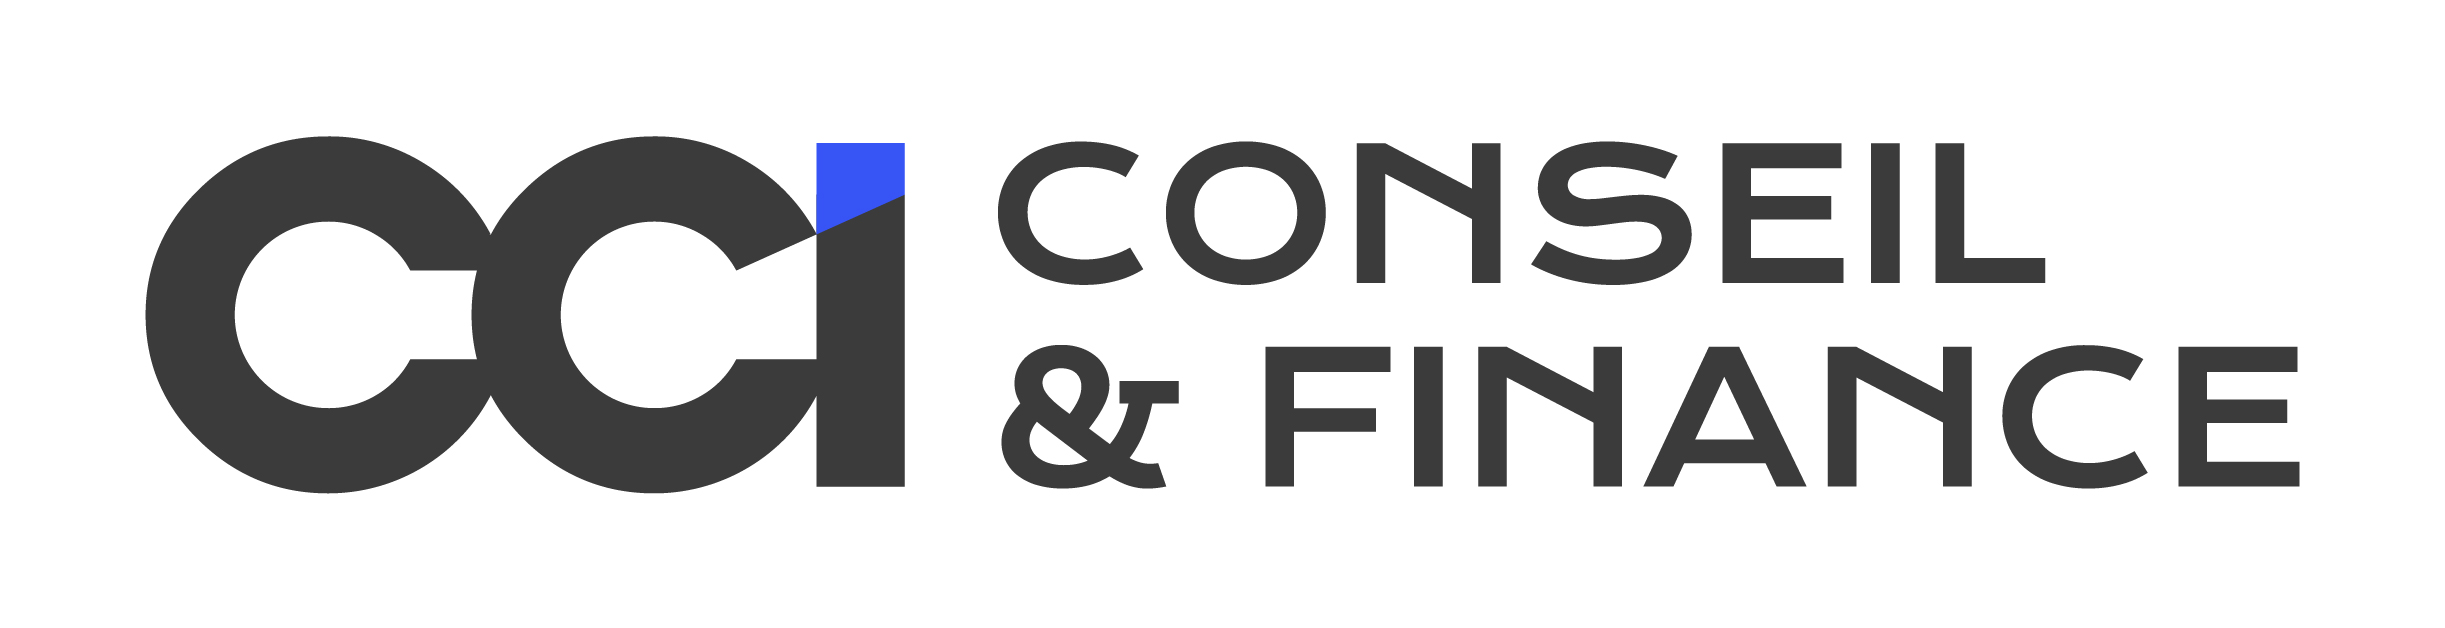 CCI Conseil & Finance